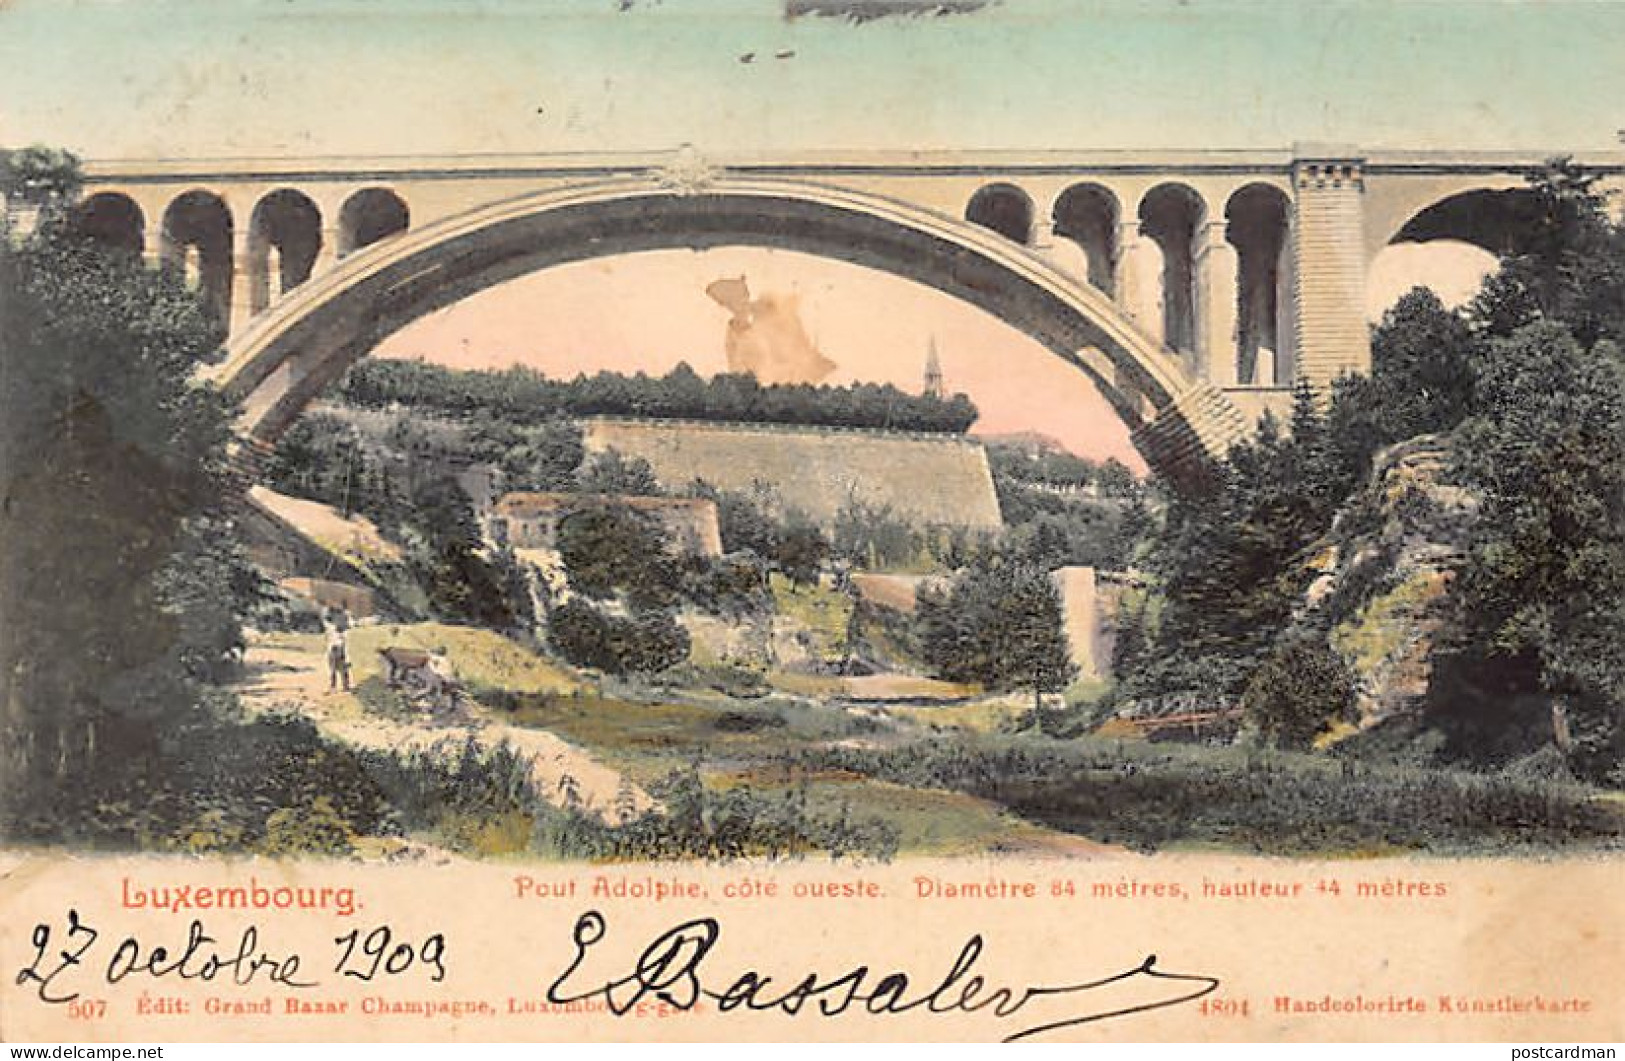 LUXEMBOURG VILLE - Pont Adolphe, Côté Ouest - Ed. Grand Bazar Champagne 507 - Luxembourg - Ville